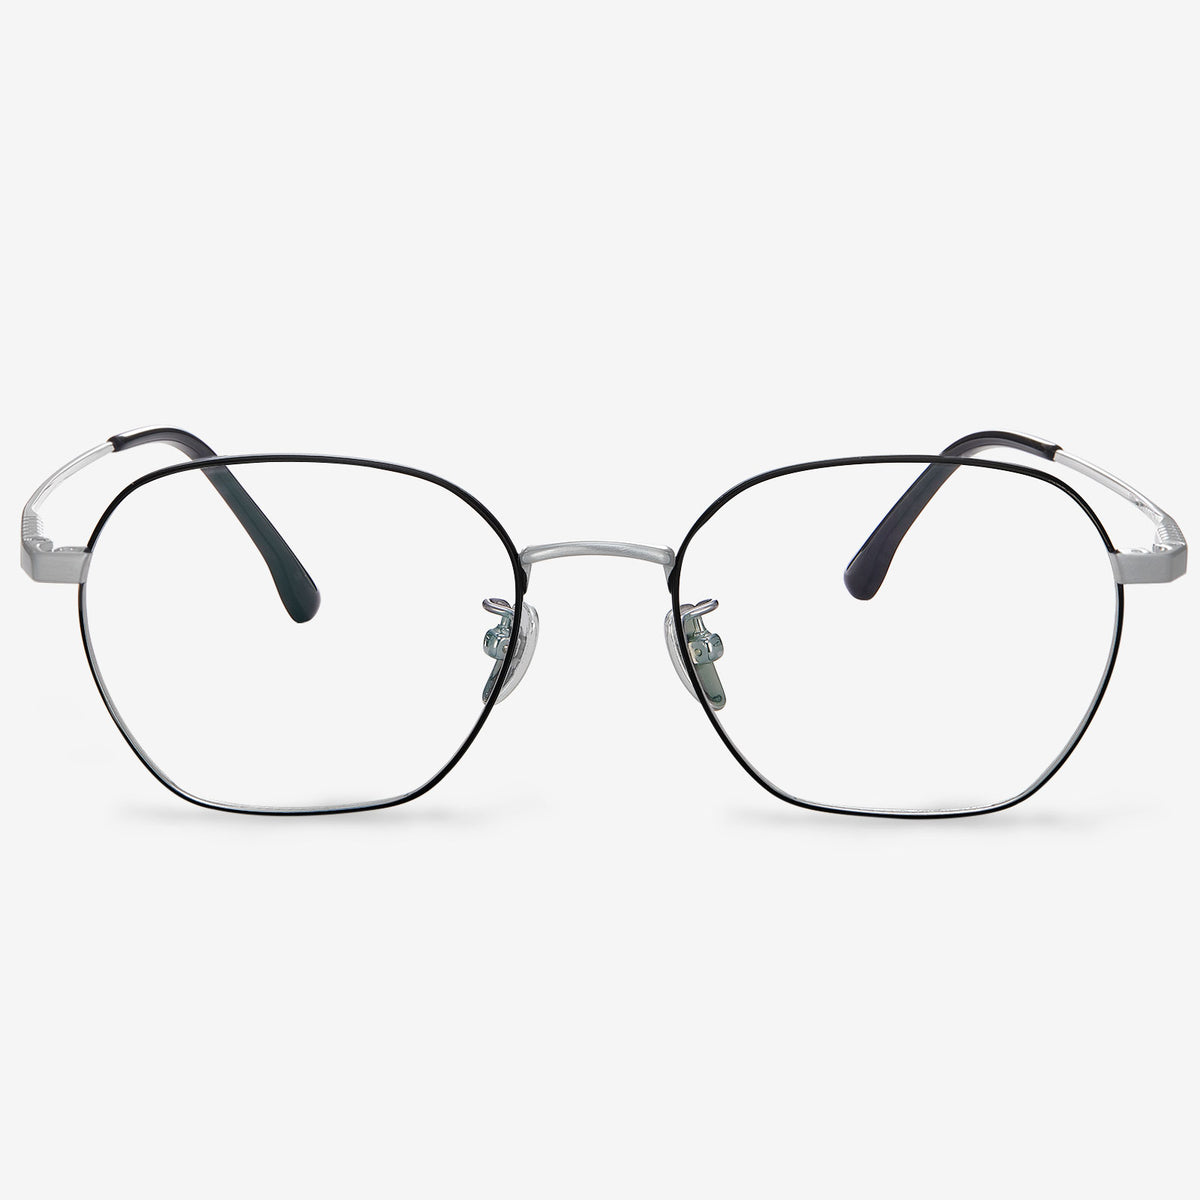 High Bridge Glasses for a High-Flying Look - Edel Optics Blog